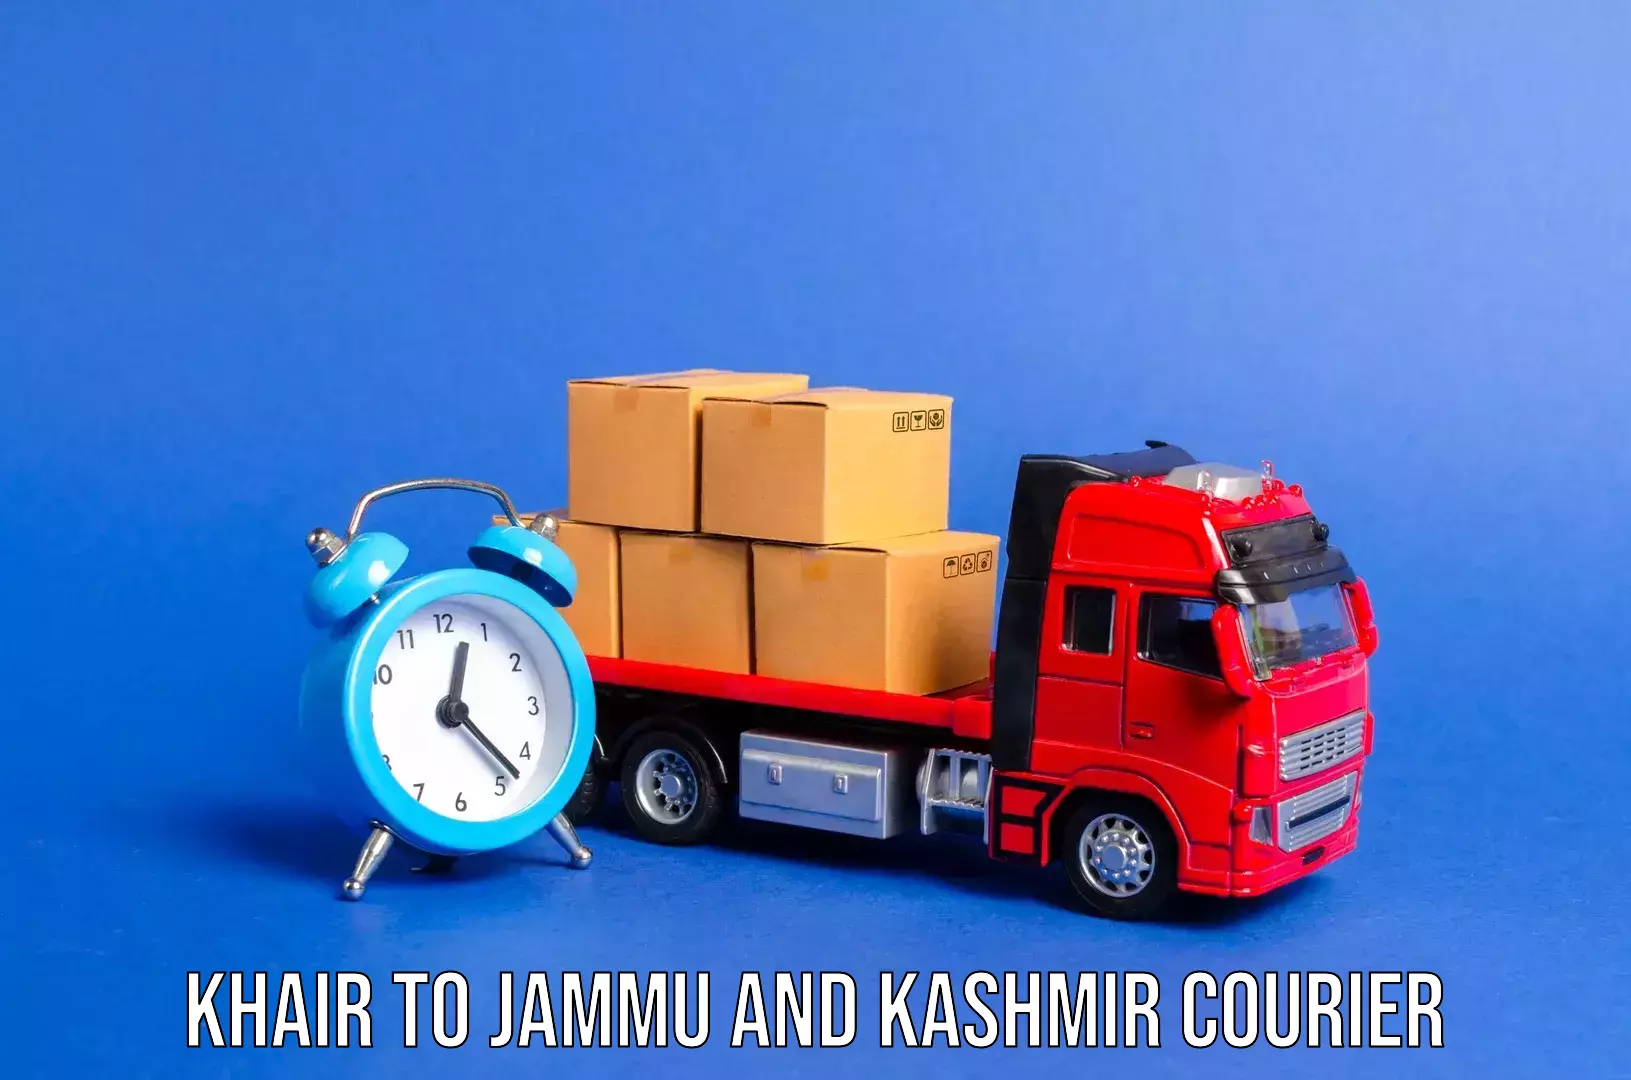 Luggage transfer service Khair to Jammu and Kashmir